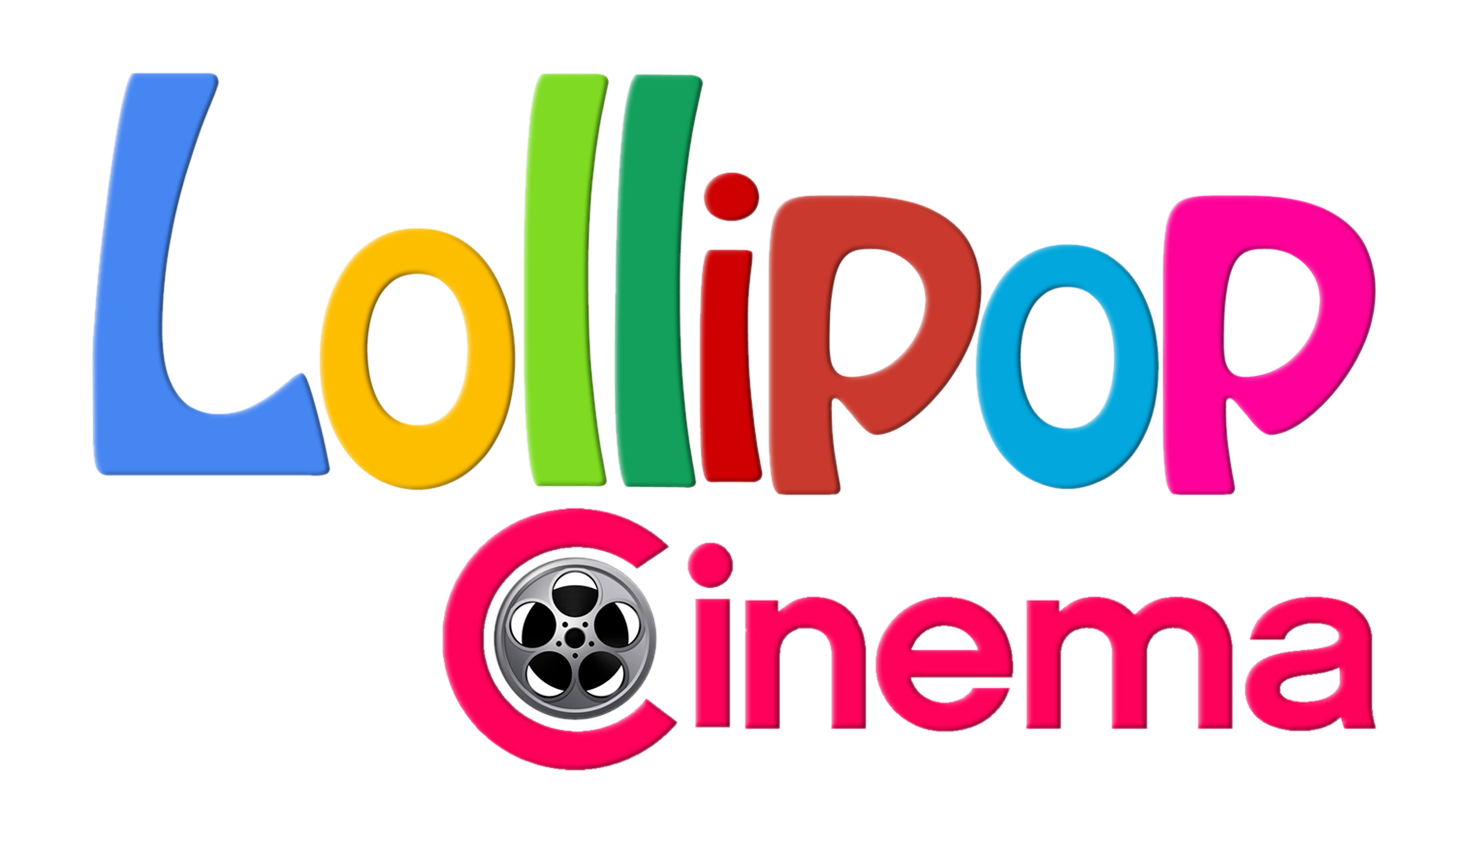 Lollipop Cinema - National Association Of Theatre Owners (1543x1543)